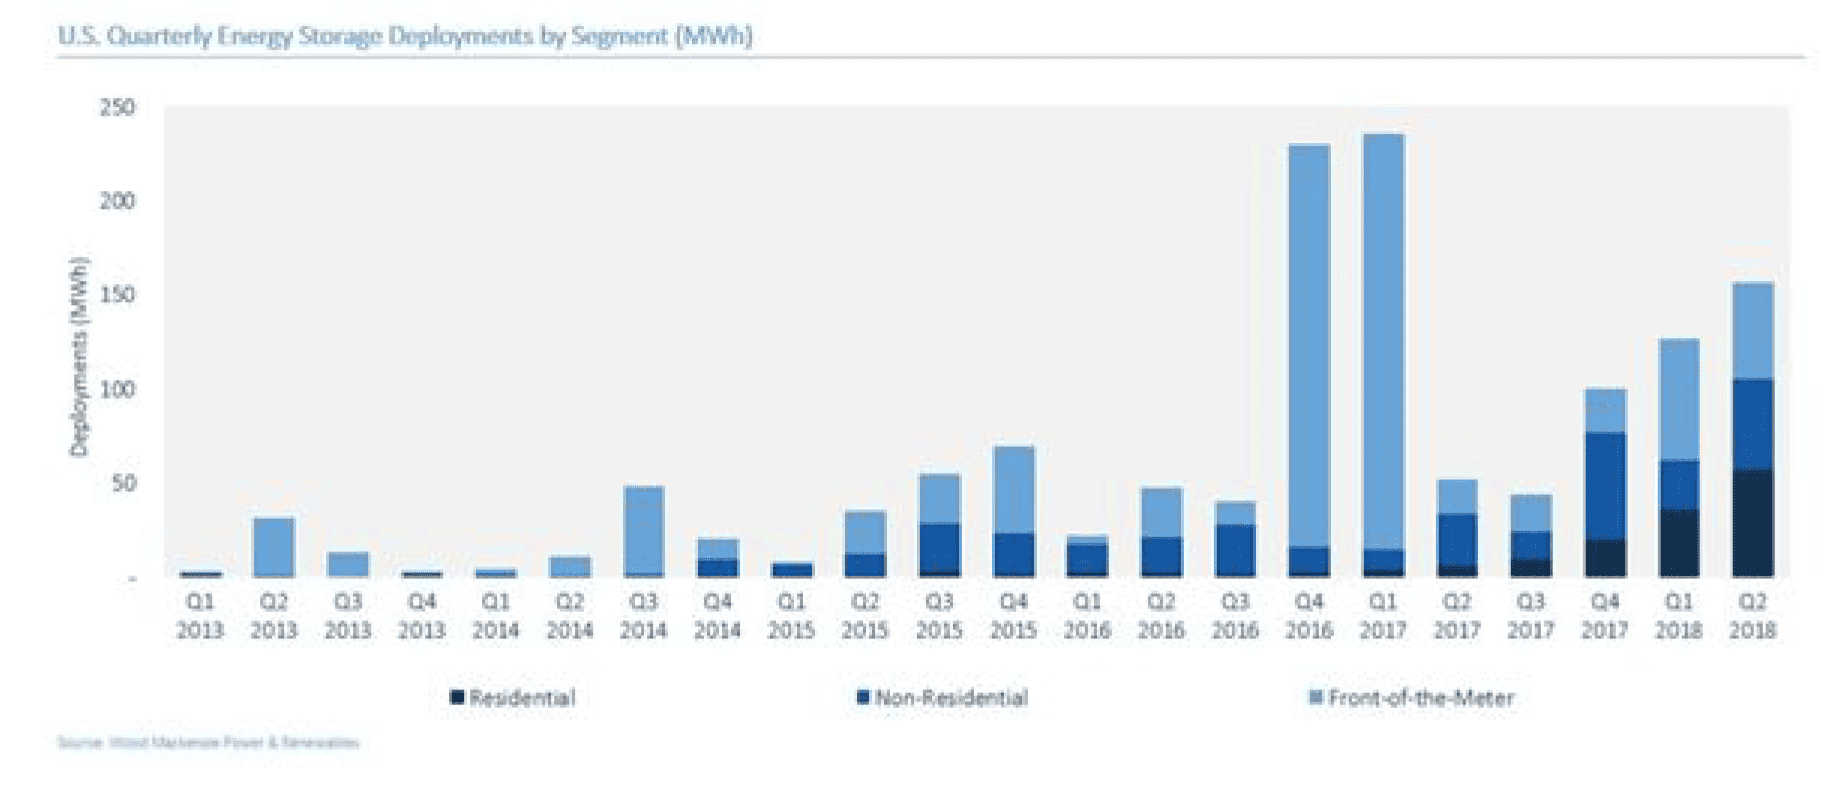 US quarterly energy storage deployment by segment